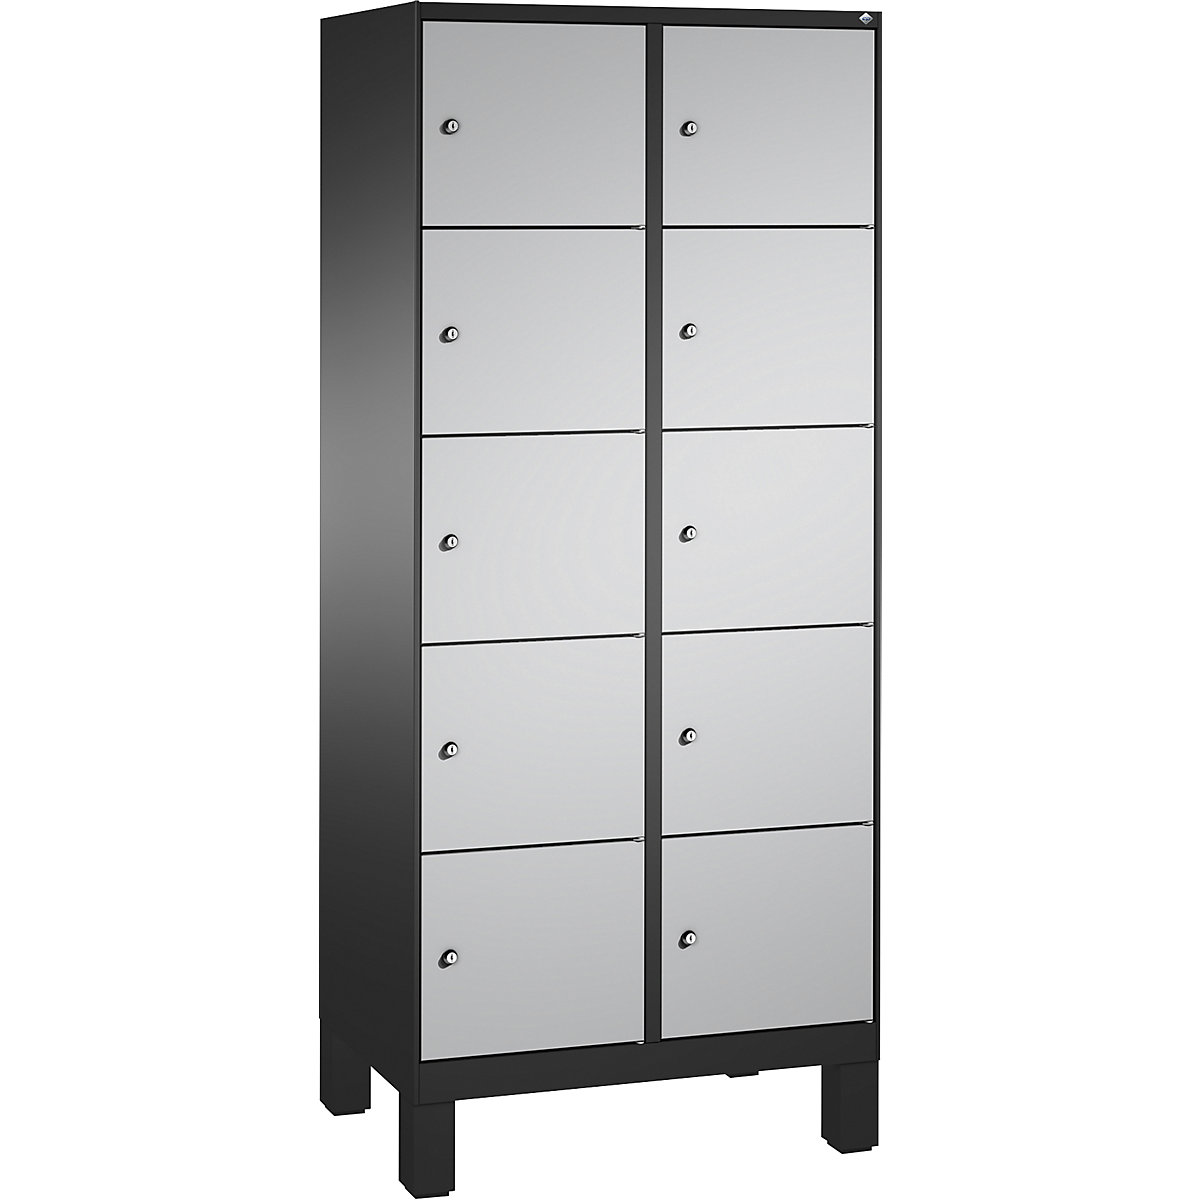 EVOLO locker unit, with feet – C+P, 2 compartments, 5 shelf compartments each, compartment width 400 mm, black grey / white aluminium-5